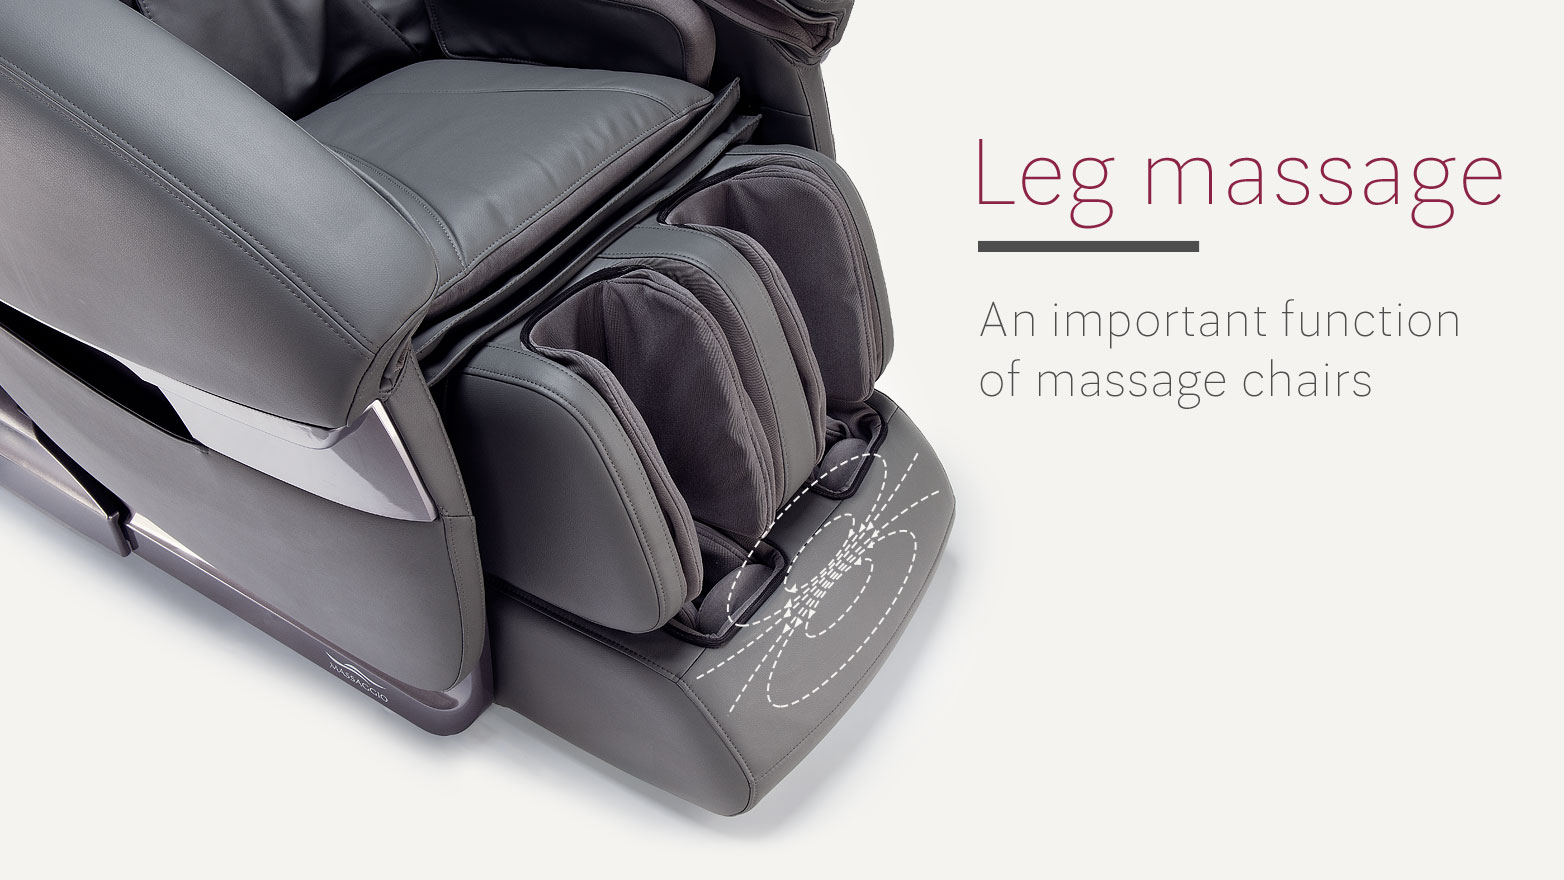 Leg massage in massage chair | Massage chairs - Rest Lords